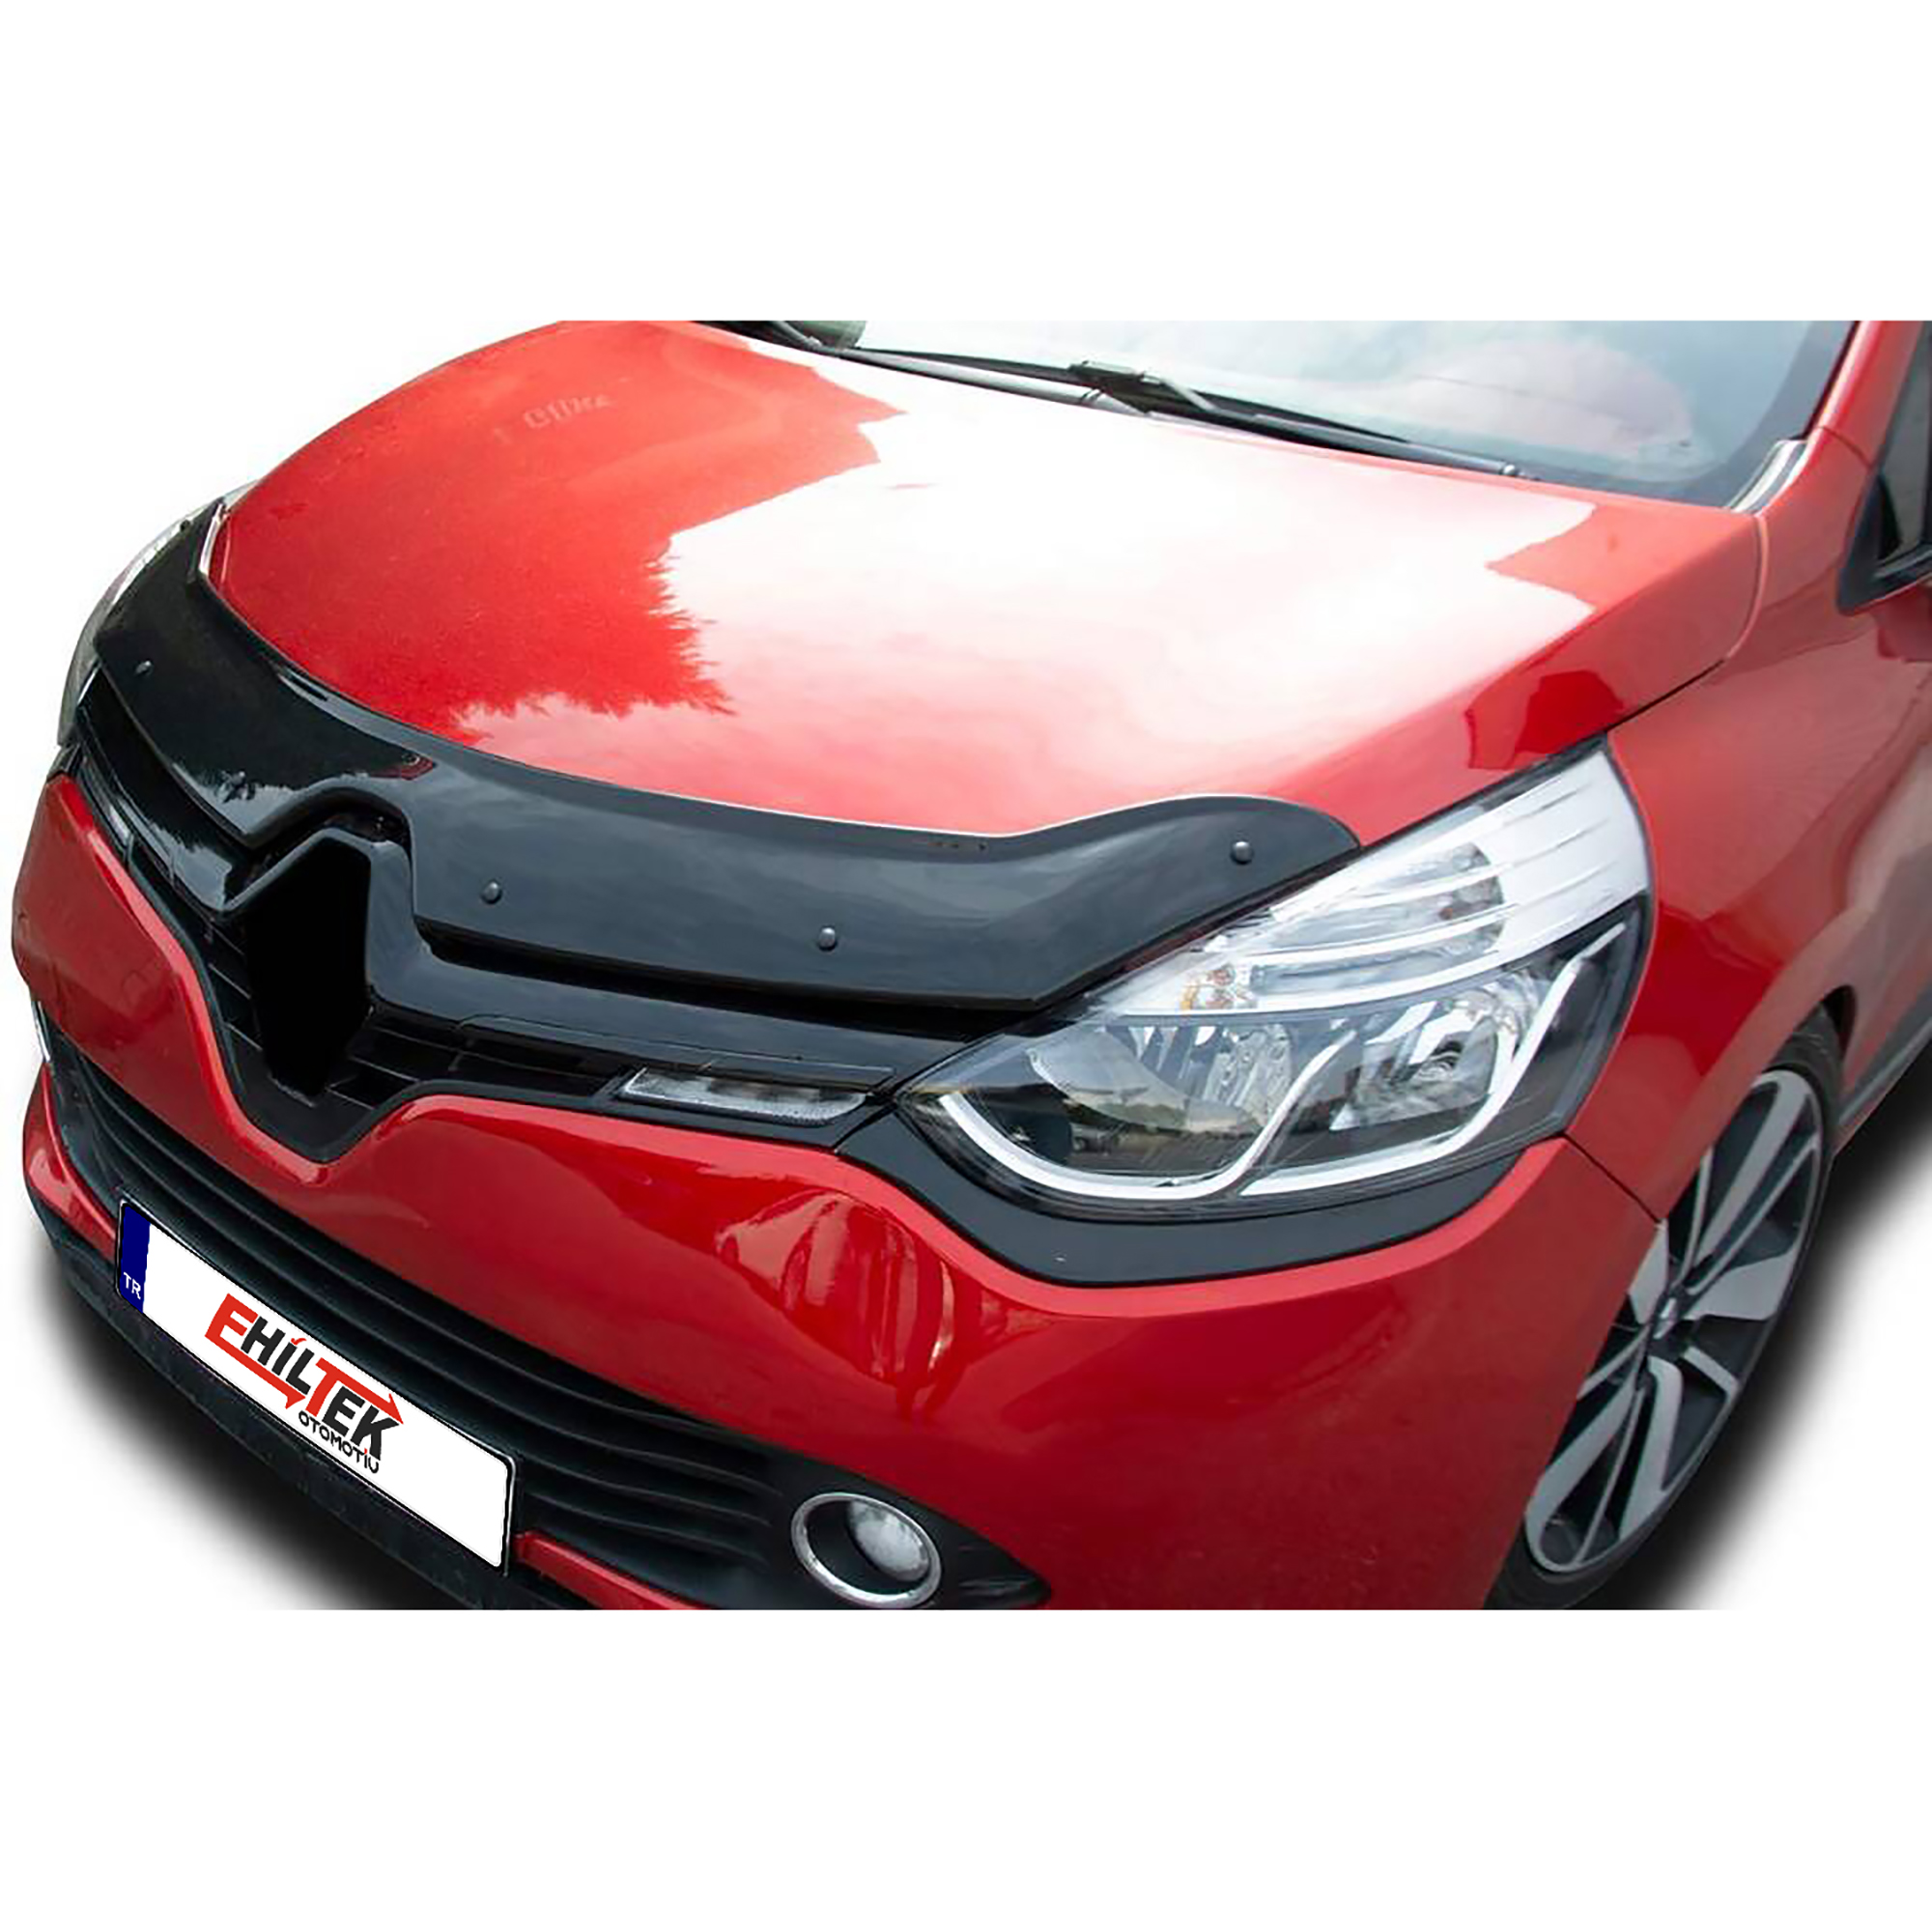 Renault Clio 4 (2012-2019) - Ön Kaput Rüzgarlığı - (1 Parça ABS Plastik)